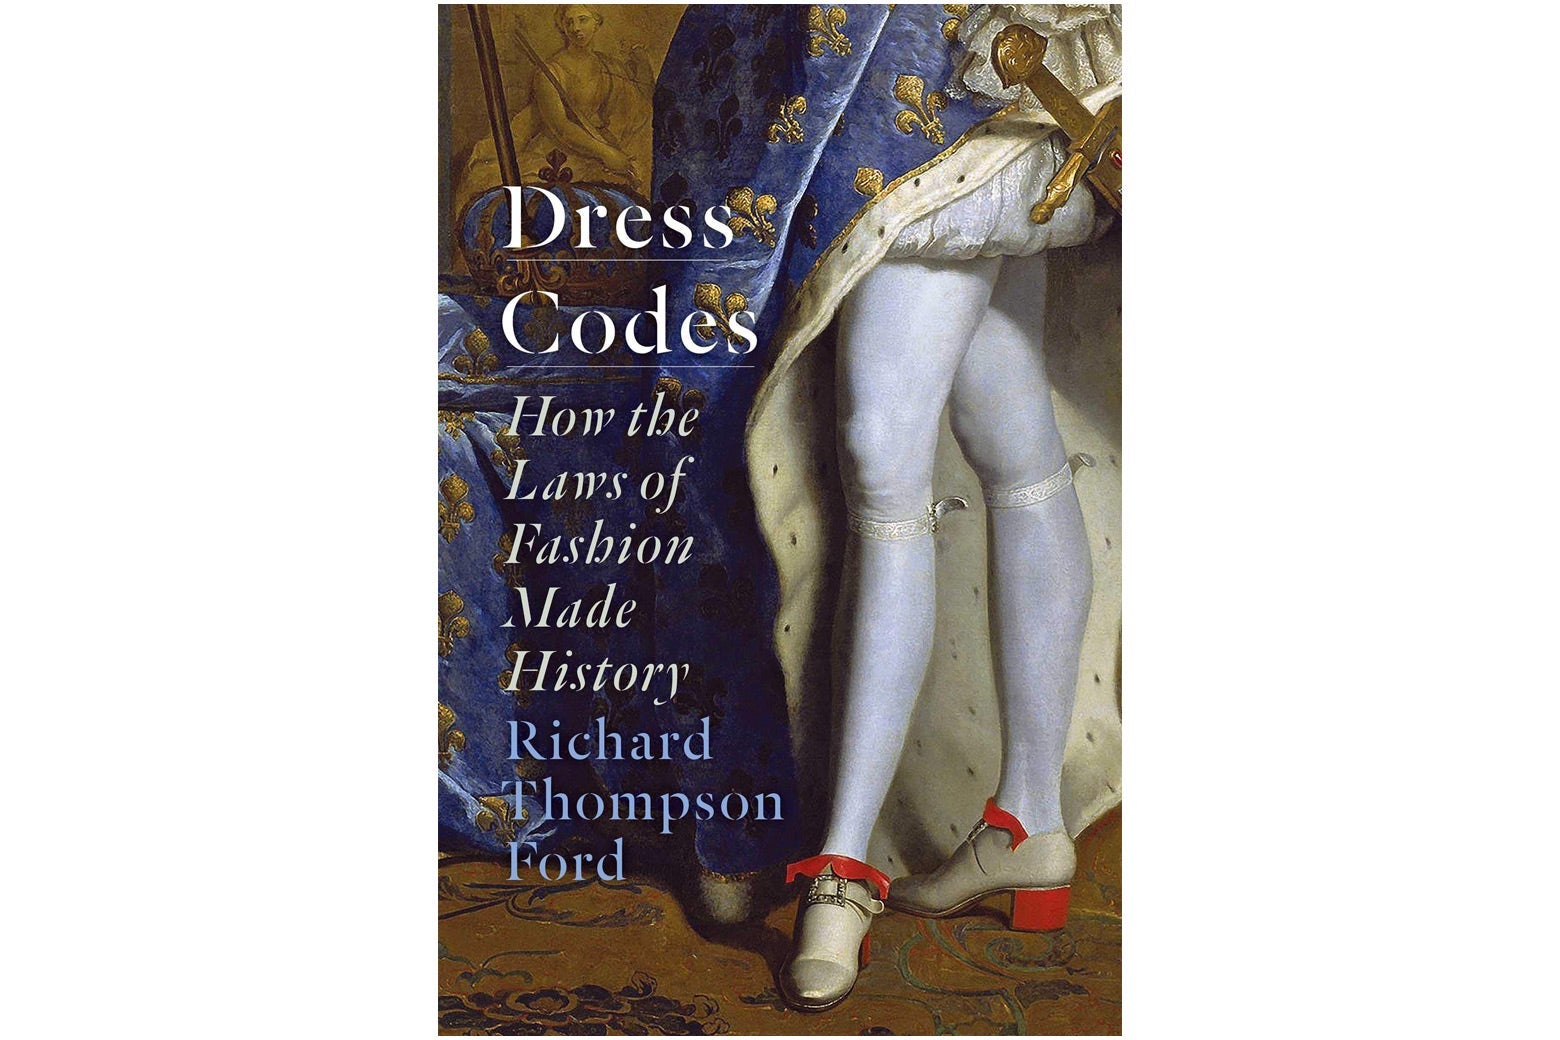 Dress Codes book cover featuring Renaissance-era tights